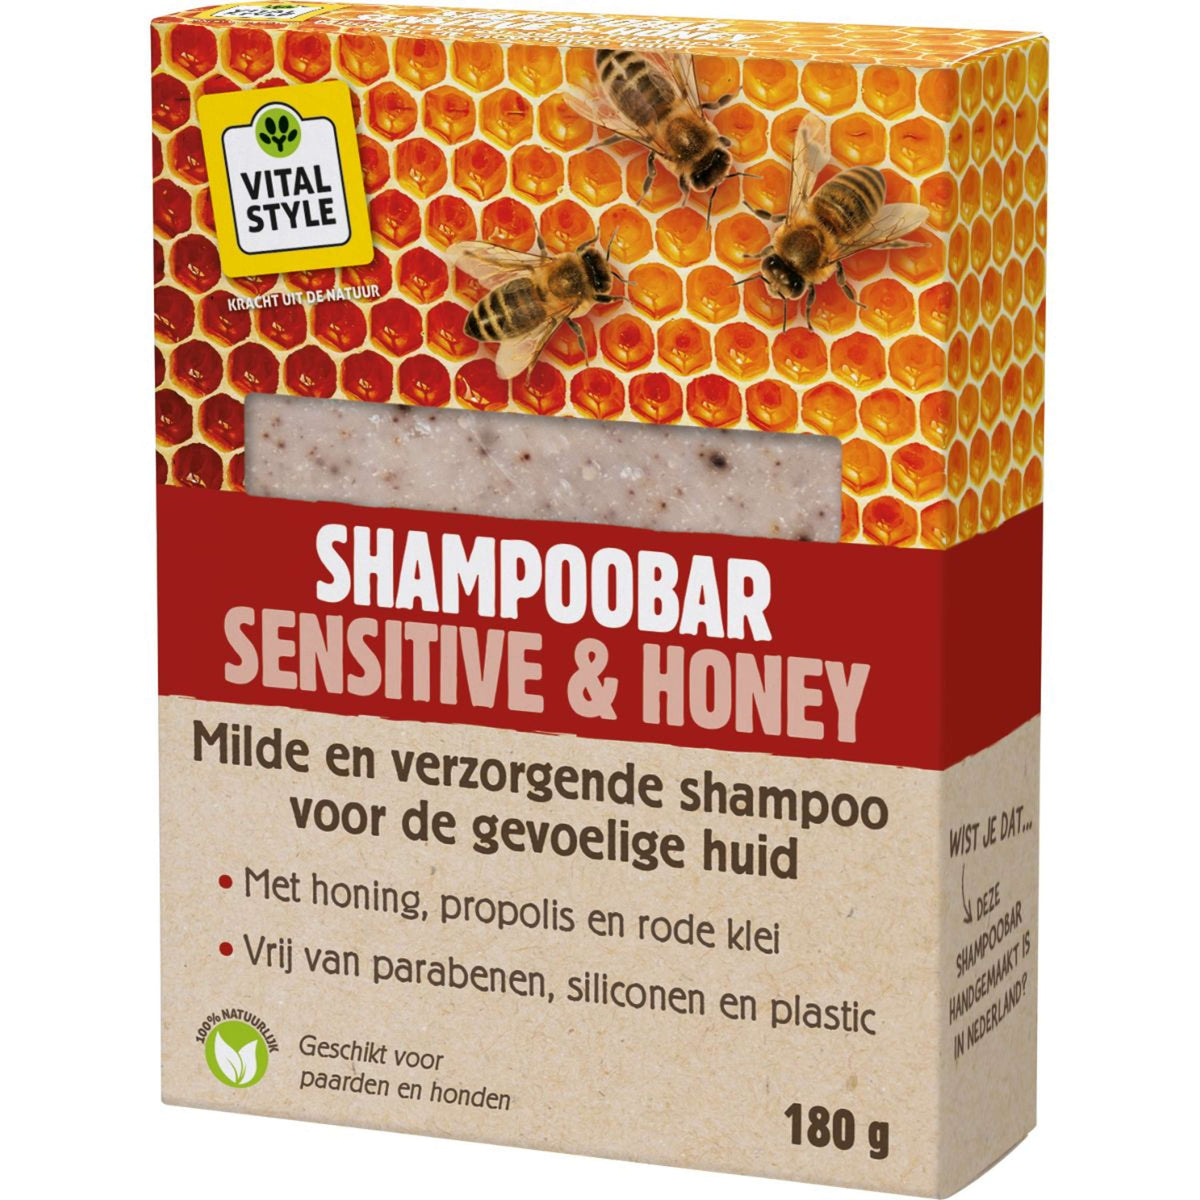 VITALstyle Shampoo Block Sensitive & Honey